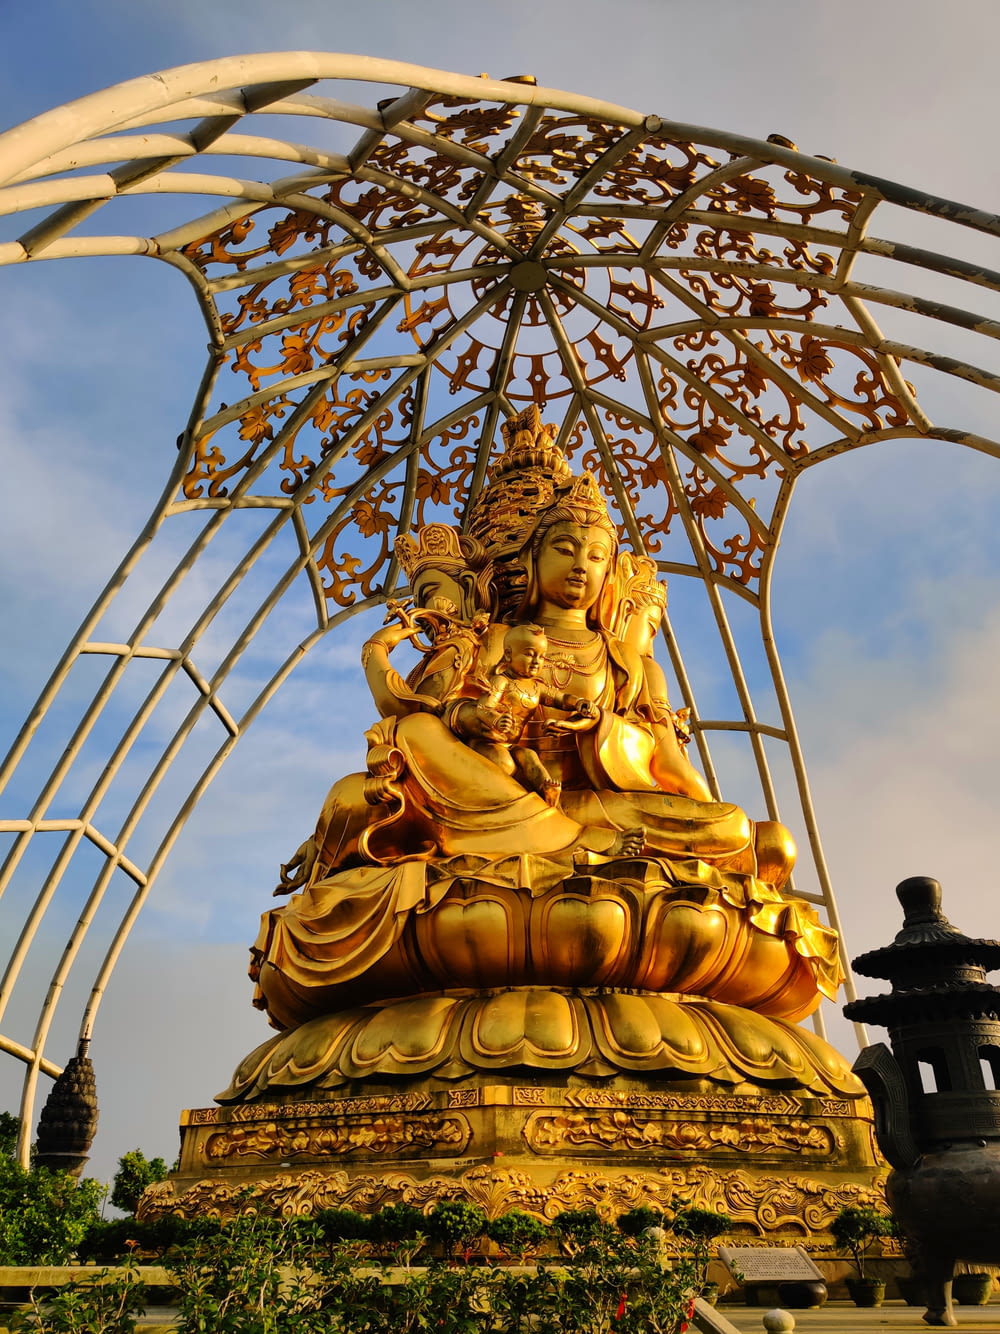 a golden buddha statue sitting under a metal structure